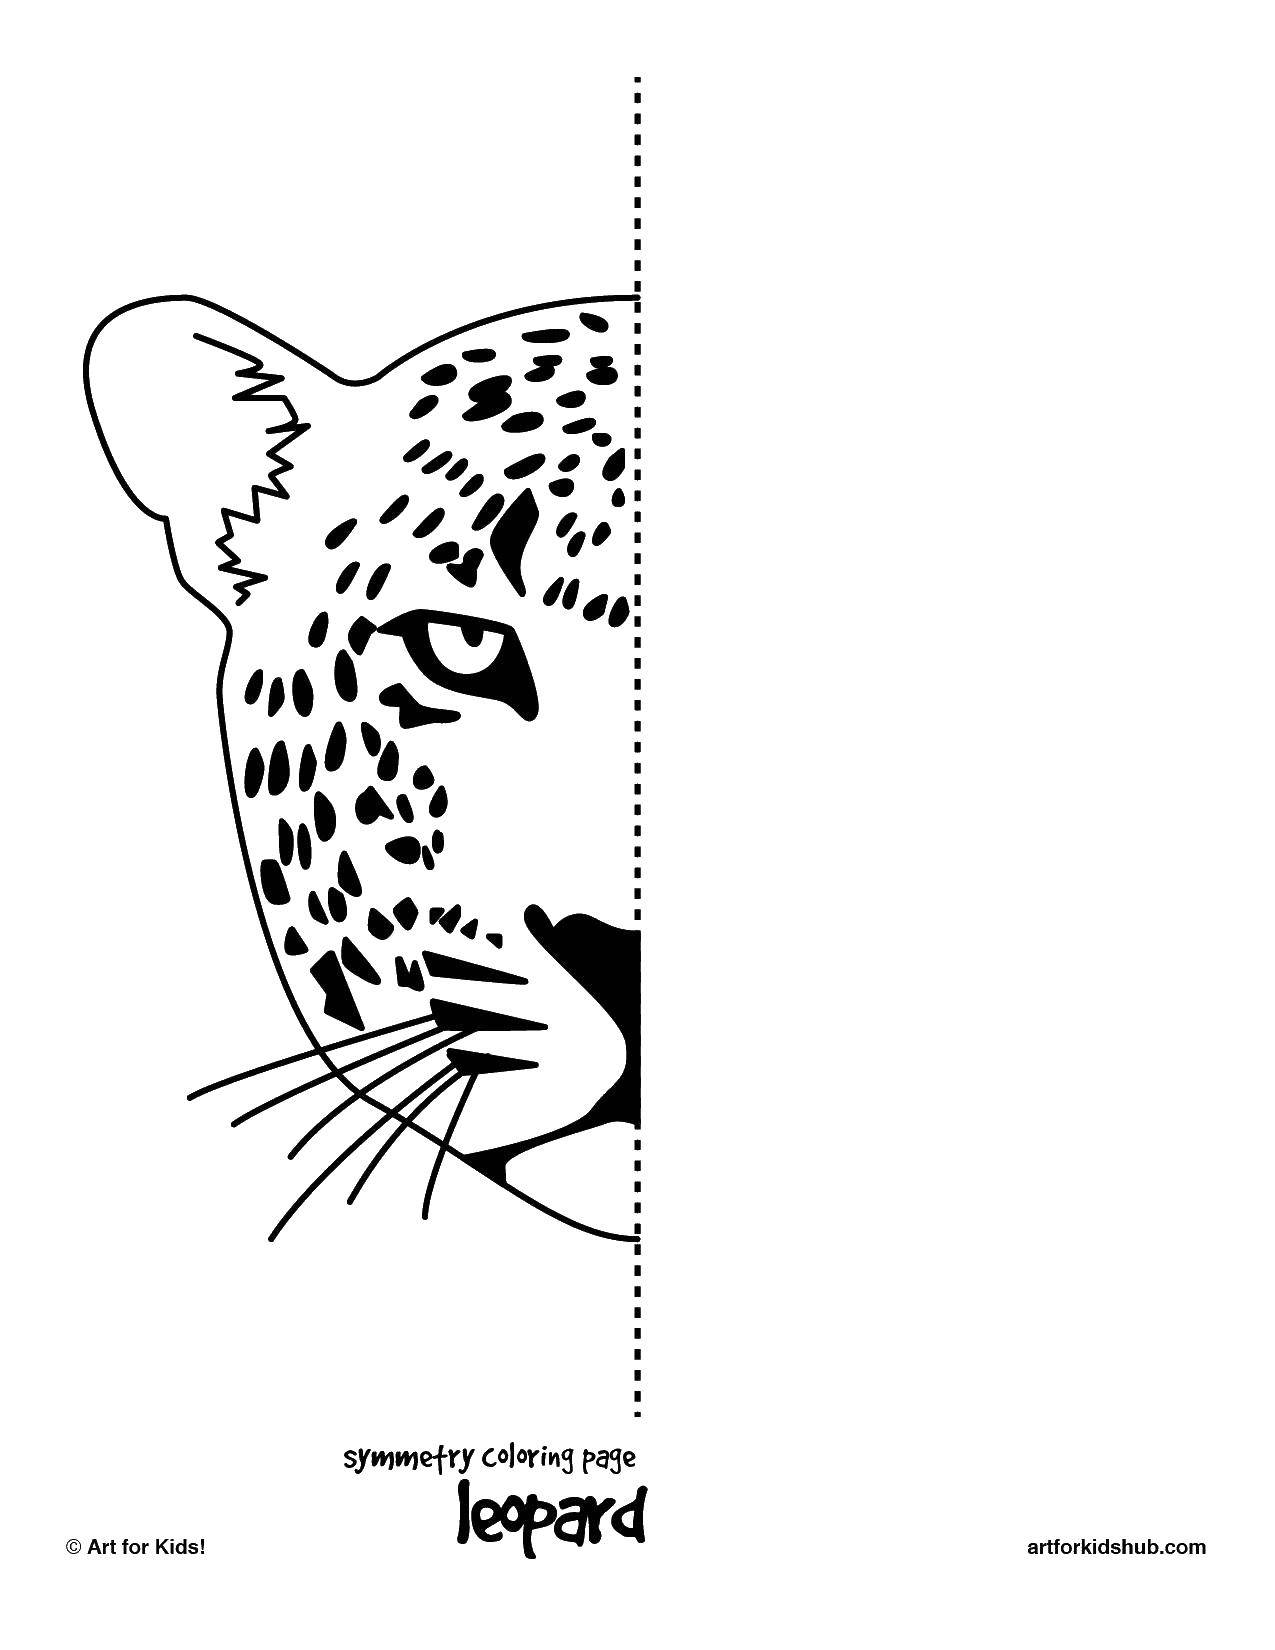 Название: Раскраска Леопард. Категория: Калейдоскоп. Теги: леопард, раскраска.